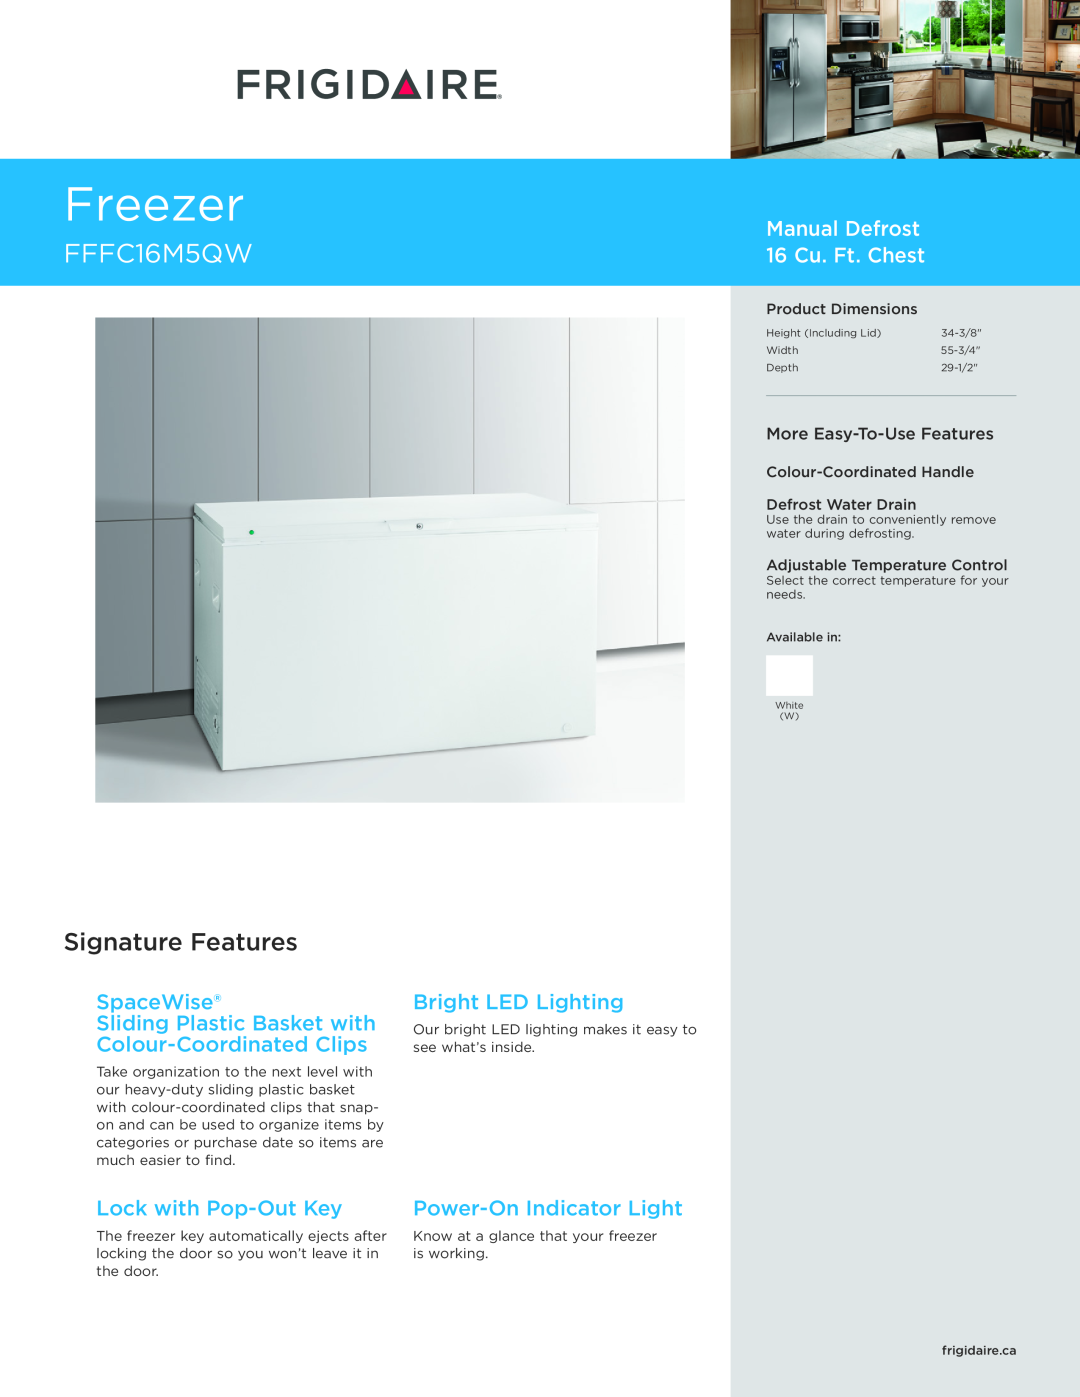 Frigidaire dimensions Freezer, FFFC16M5QW, Signature Features, Manual Defrost 16 Cu. Ft. Chest, SpaceWise 